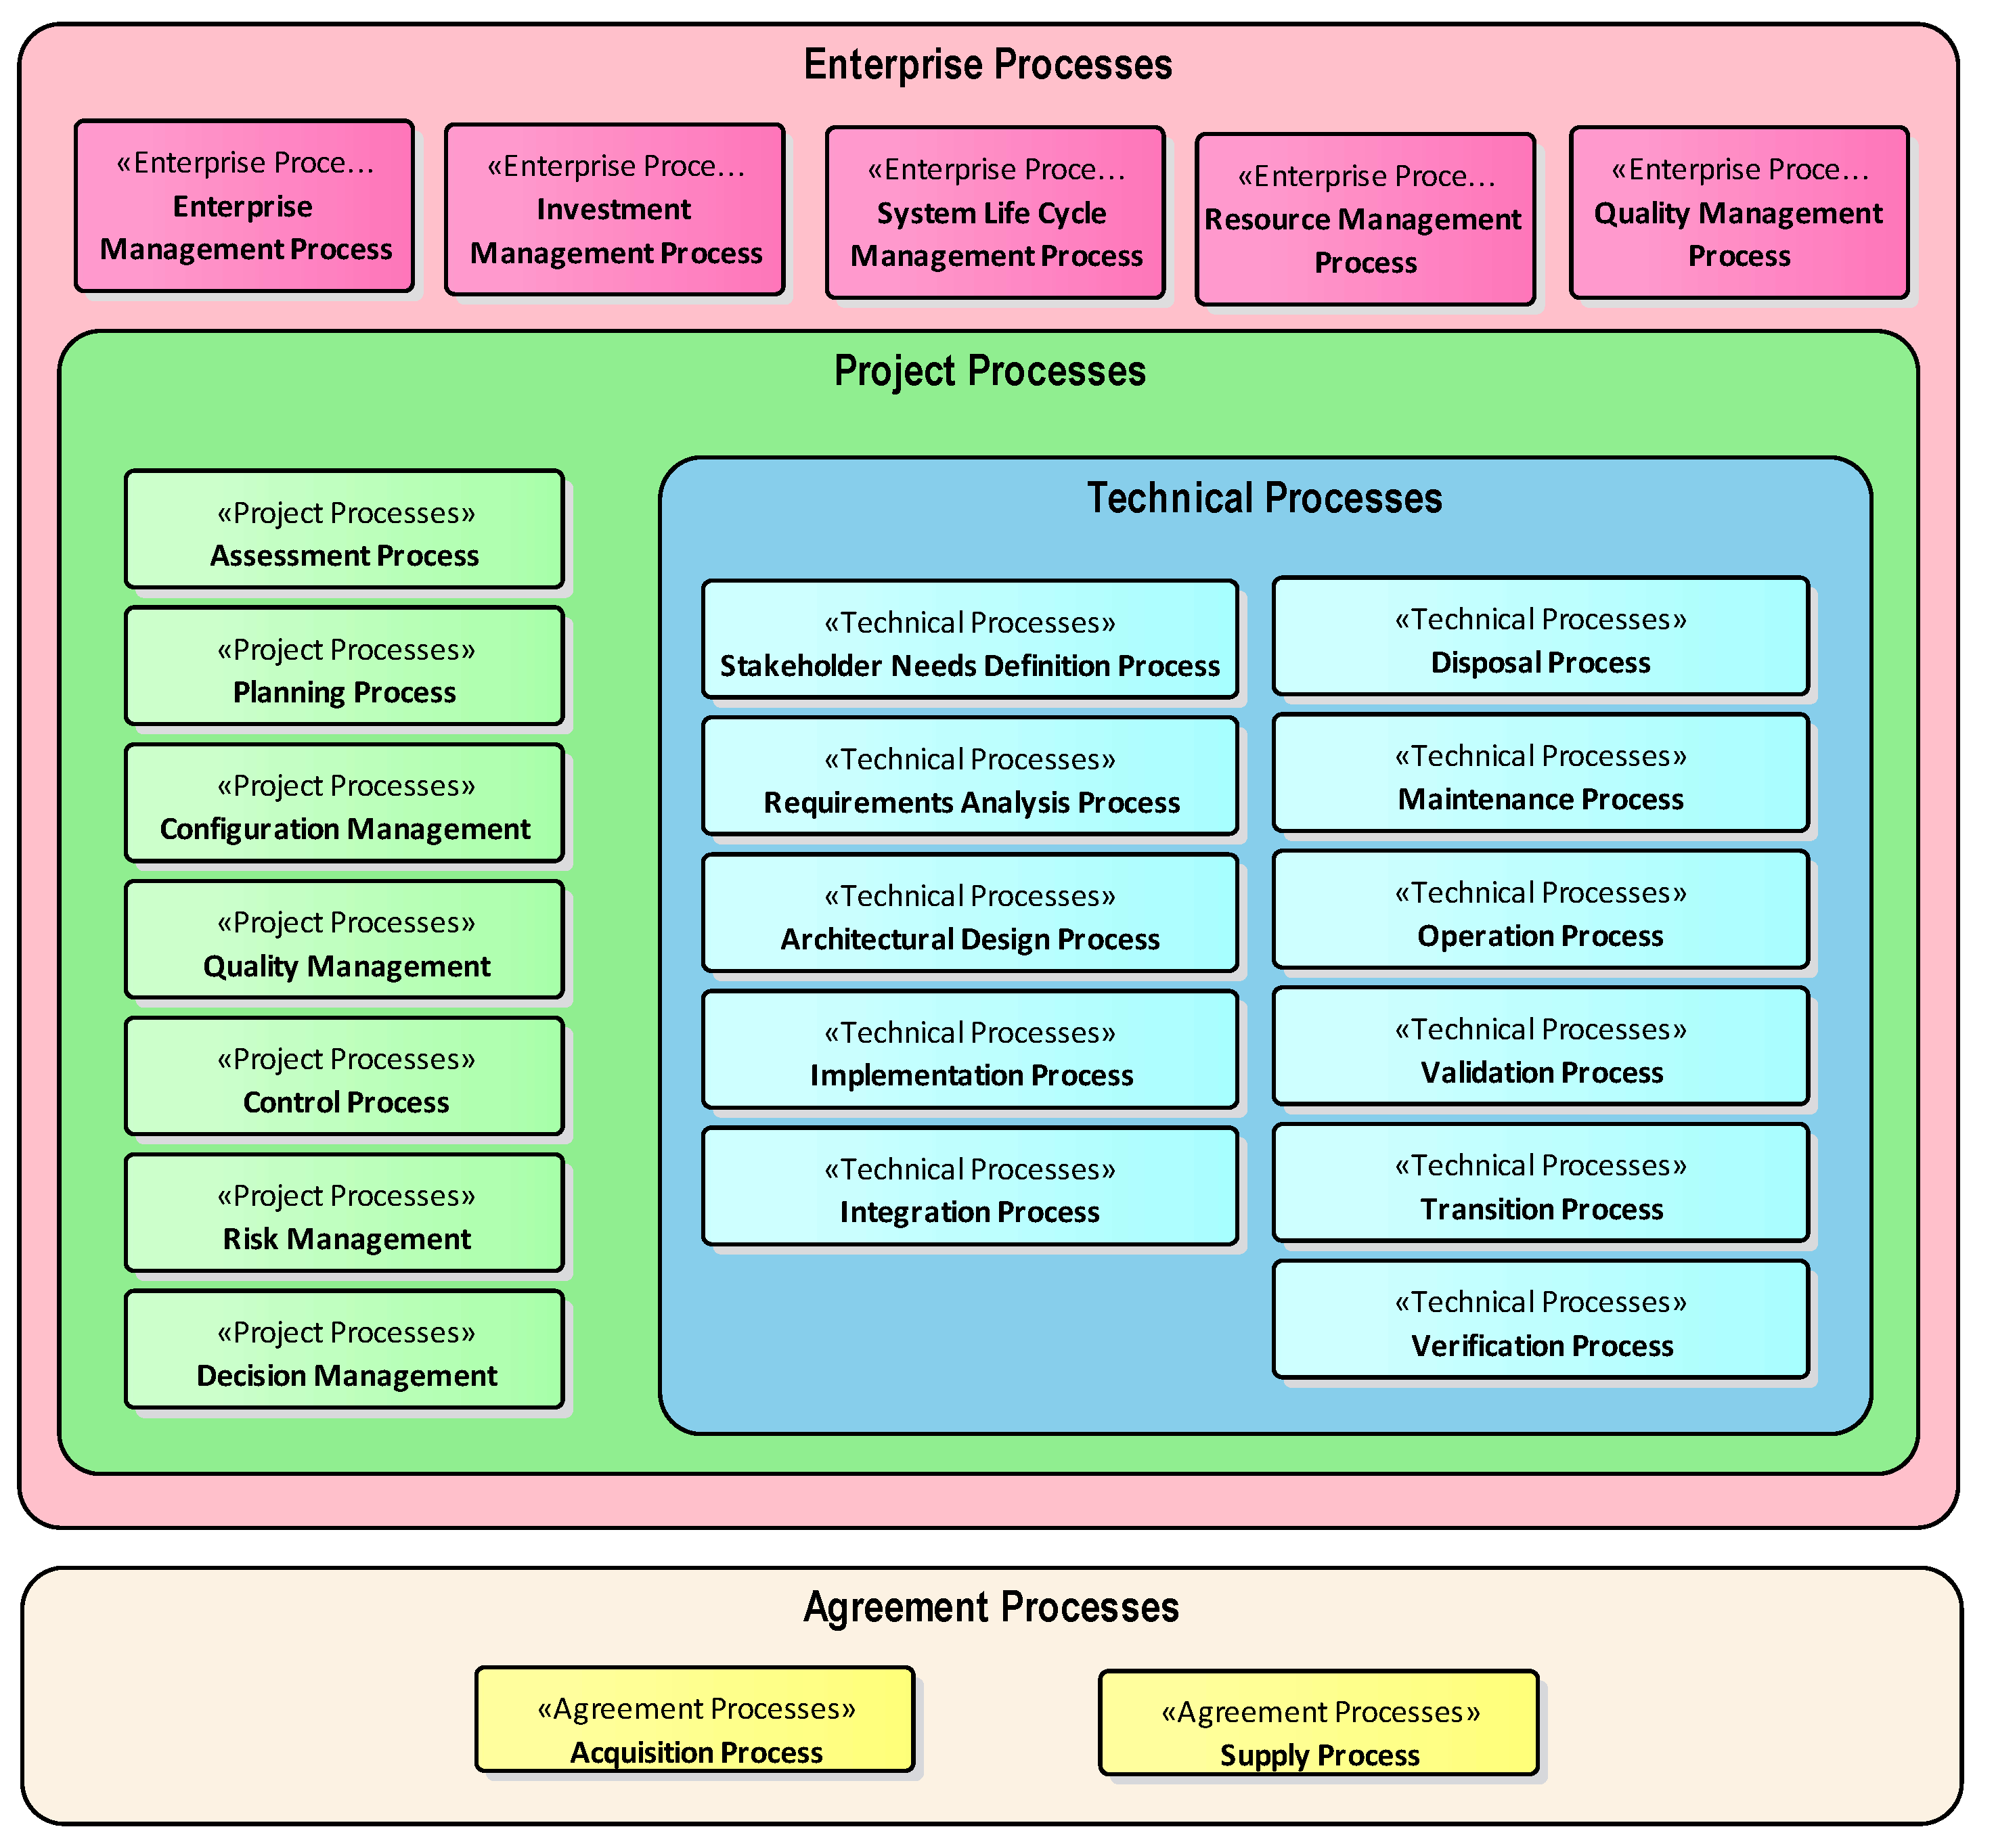 DDD methods evaluation matrix